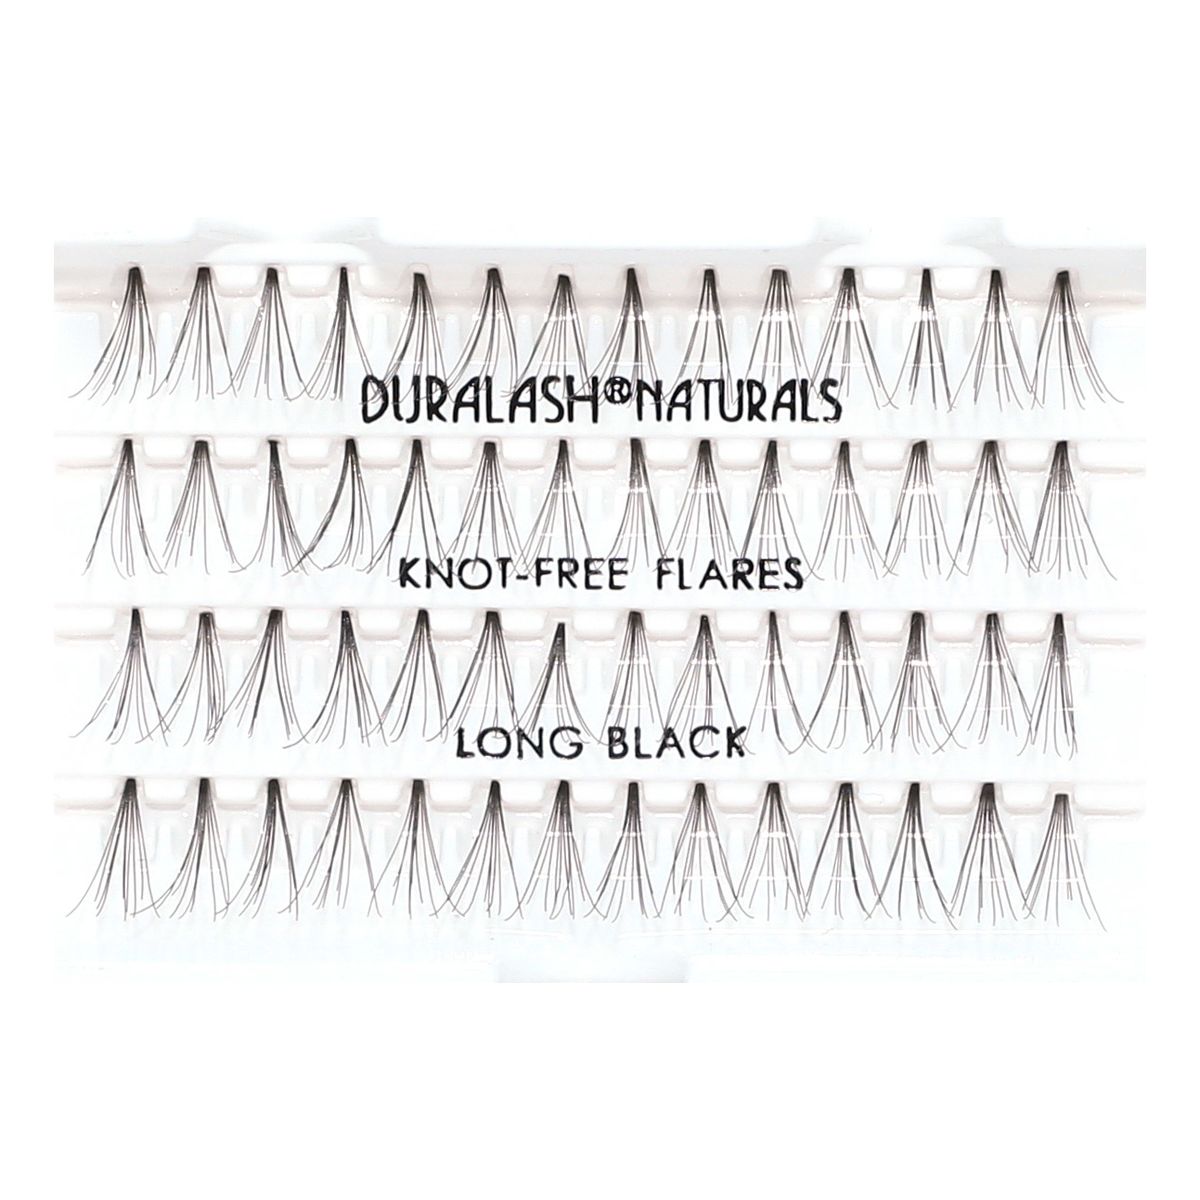 Ardell Duralash Natural Long Black 6-Pack Kępki Rzęs Bezwęzełkowe Długie Czarne 6x56szt.